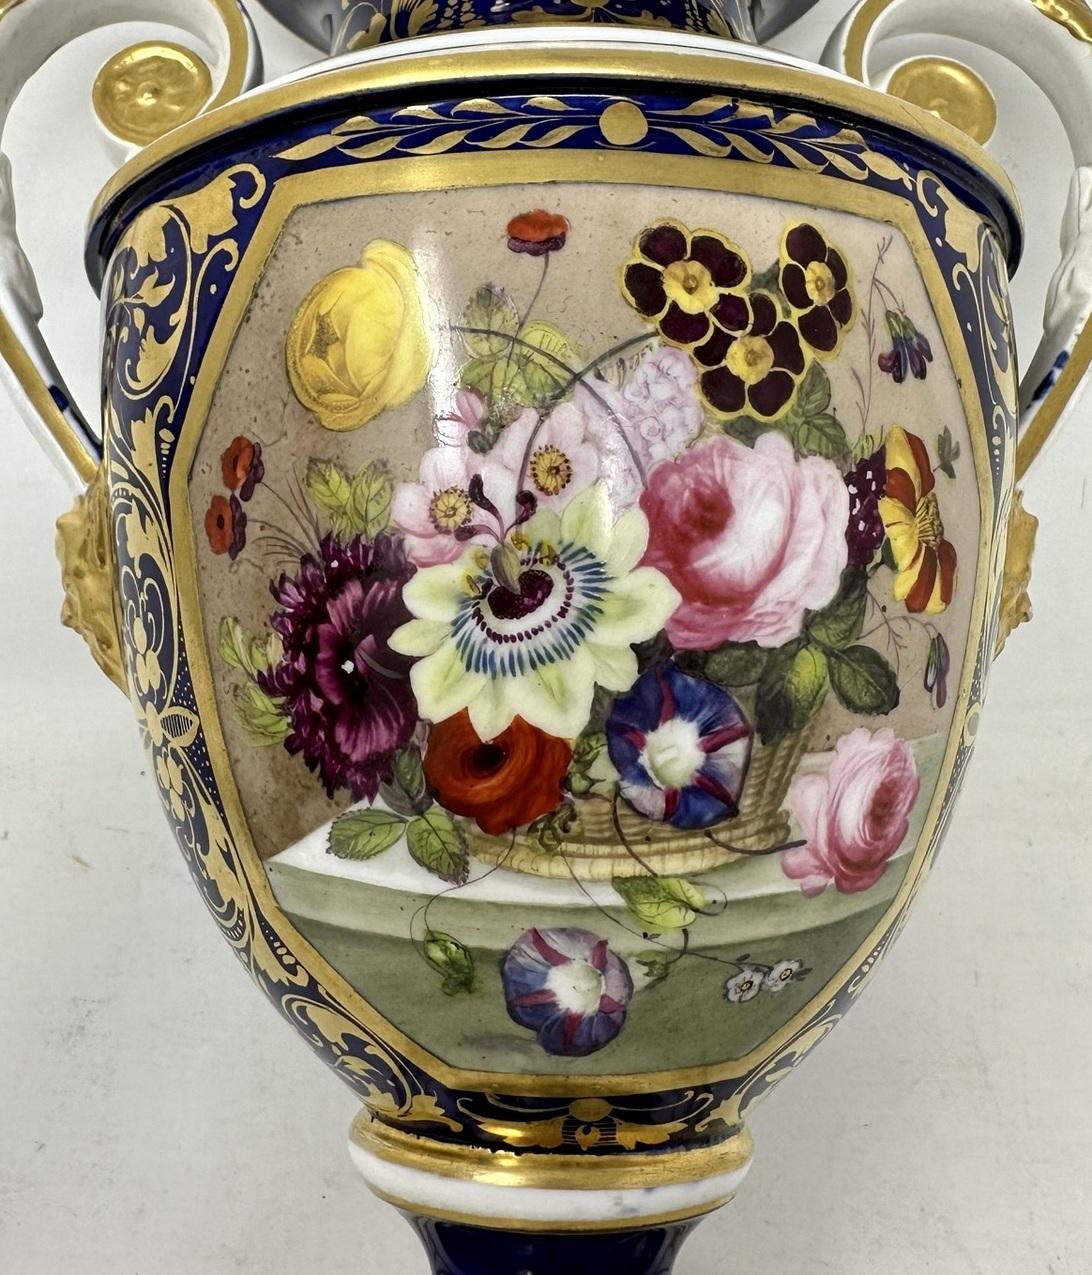 Antique Garniture English Royal Crown Derby Porcelain Vases by Thomas Steel 19C  For Sale 2